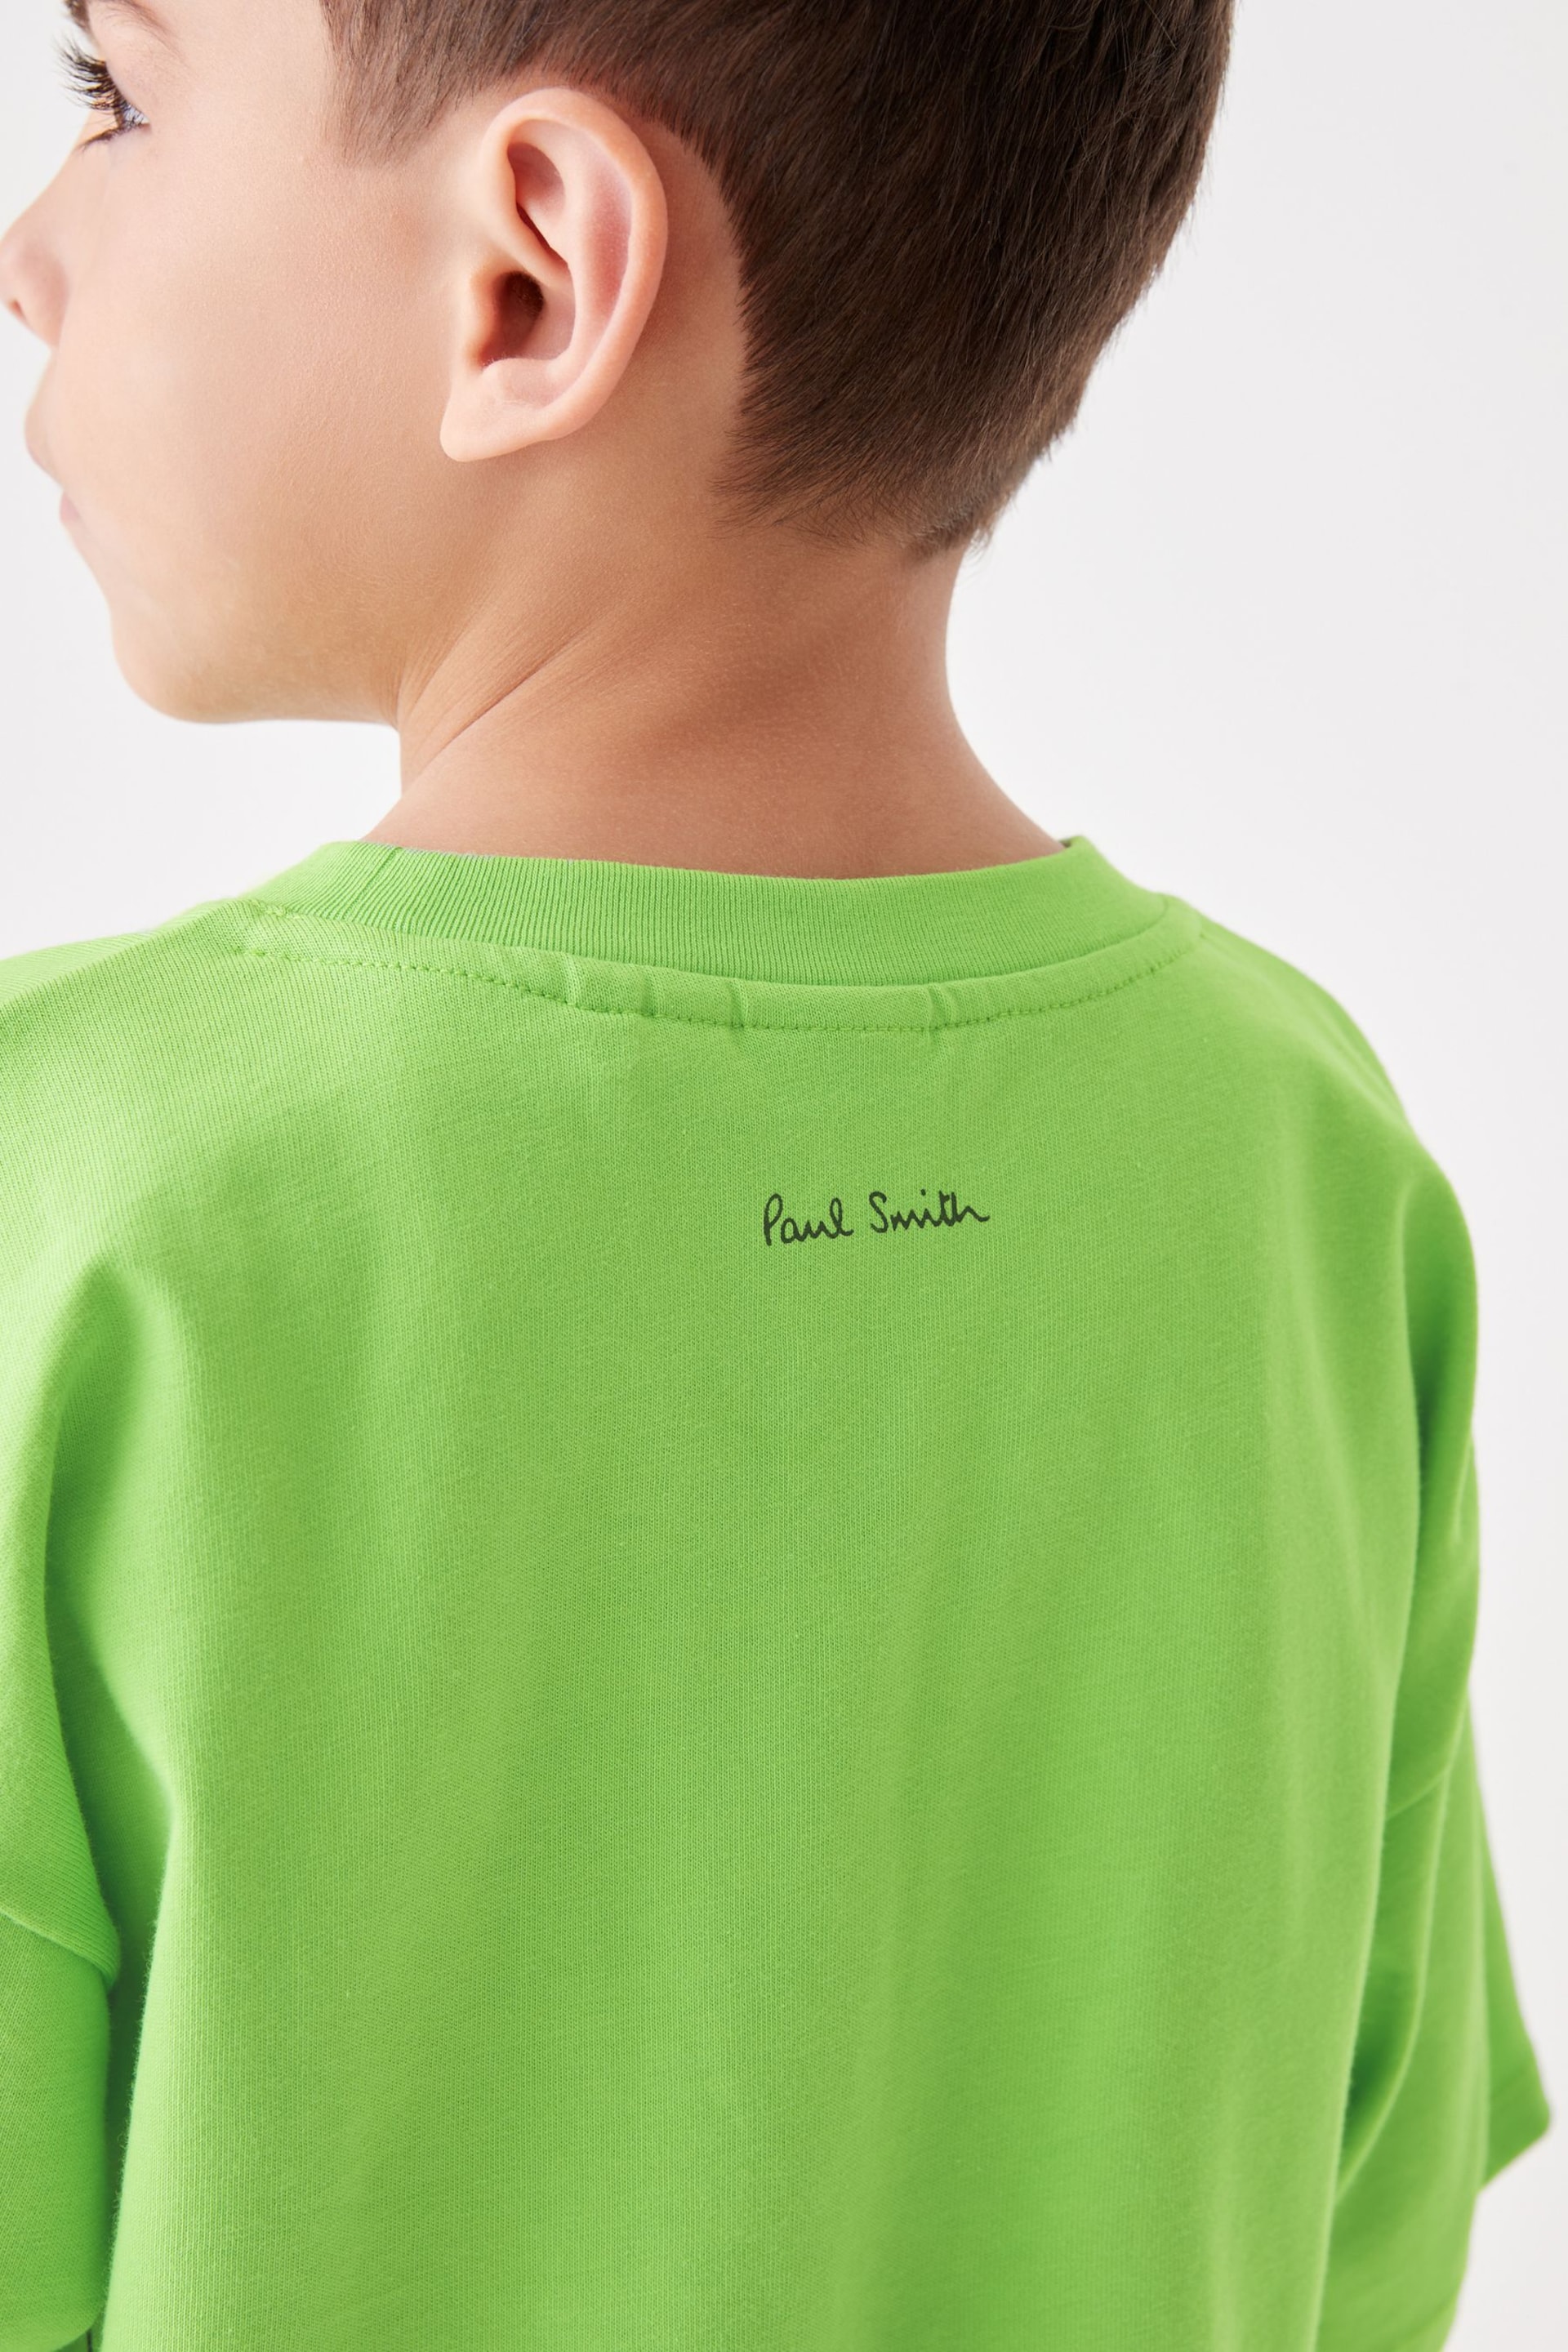 Paul Smith Junior Boys Oversized PS Short Sleeve Print T-Shirt - Image 5 of 10